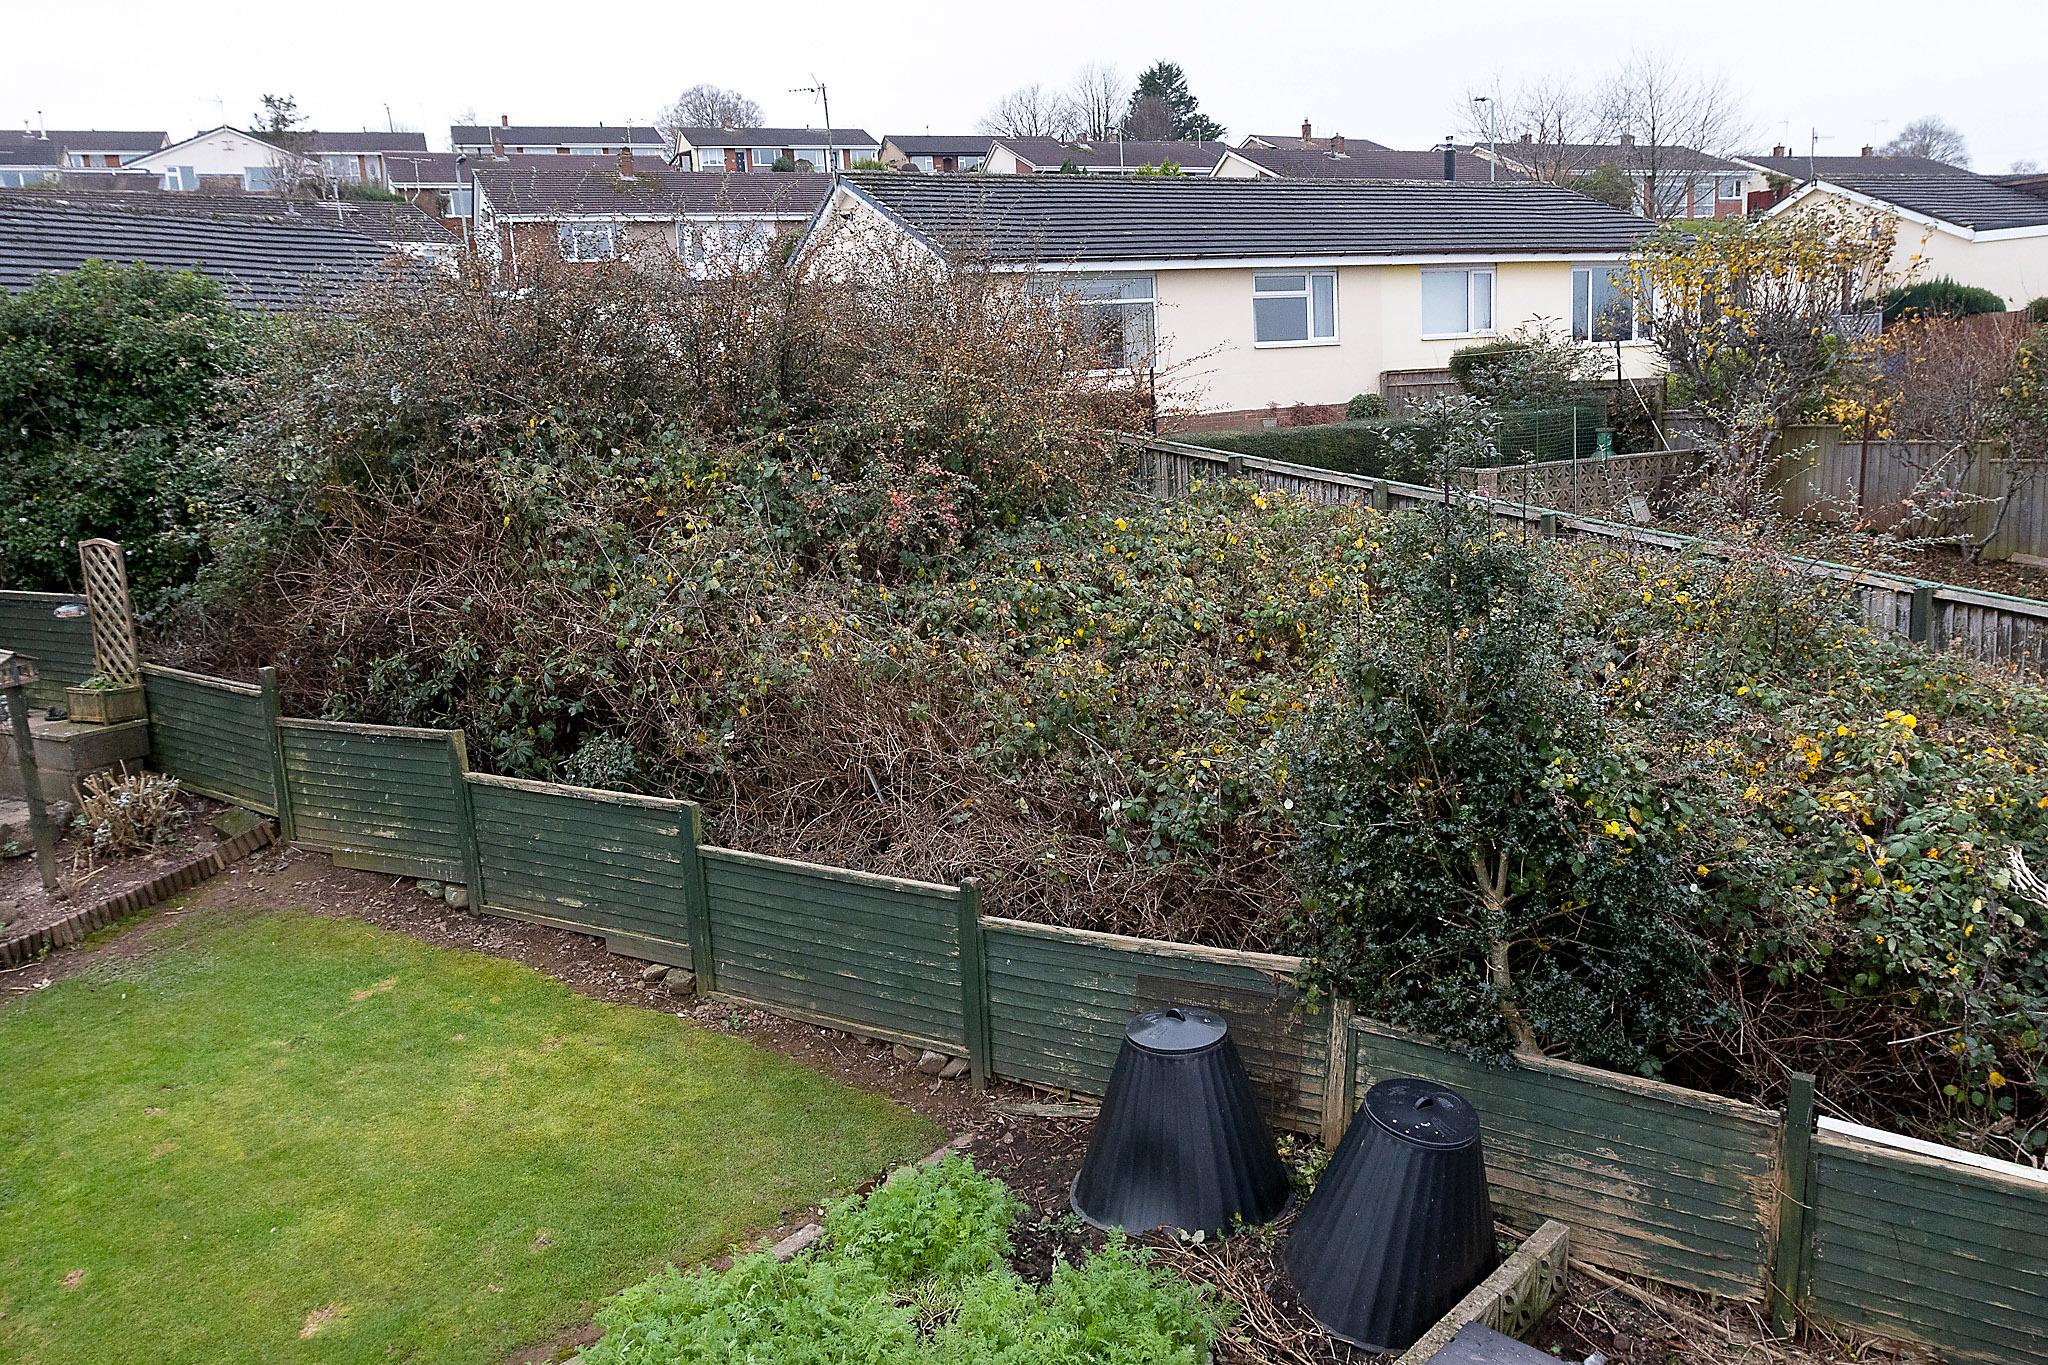 The property's overgrown back garden